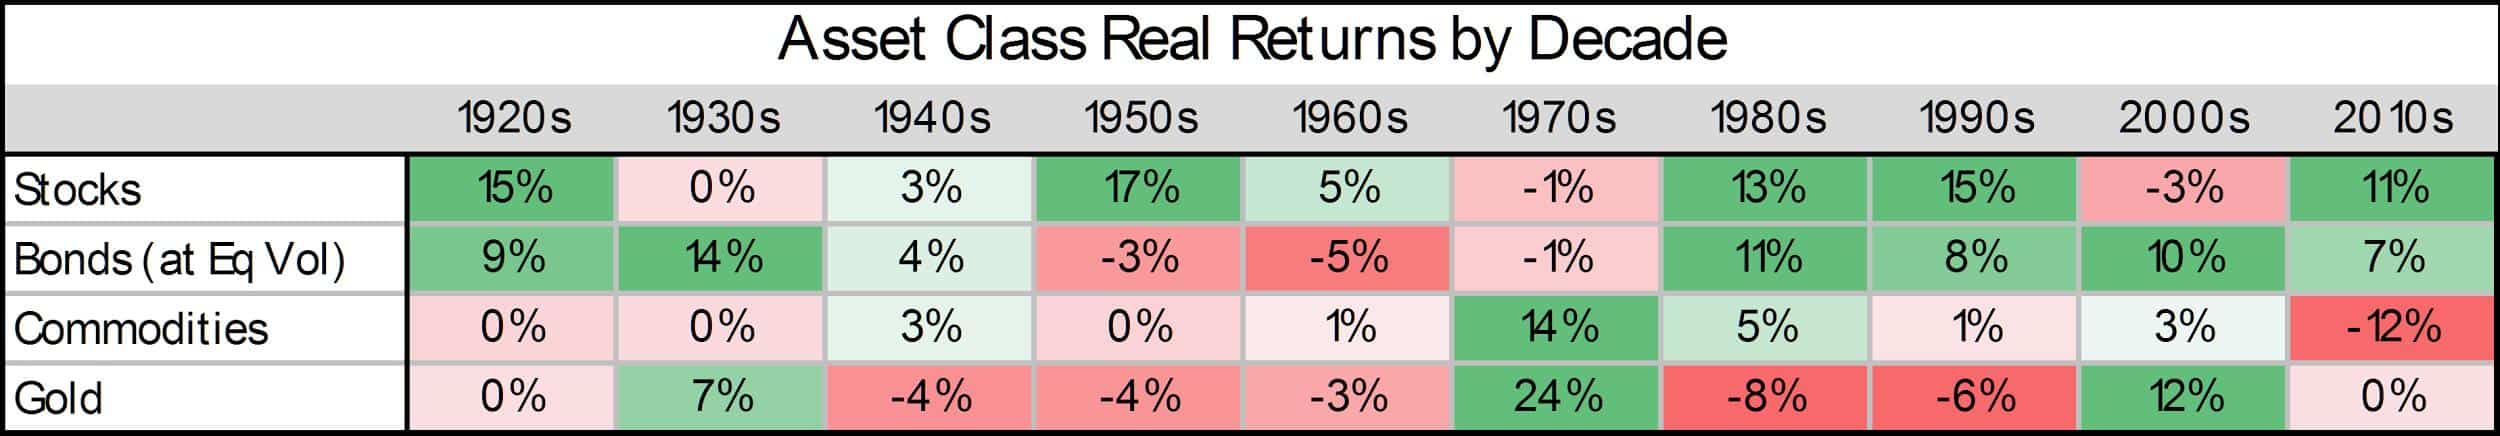 Asset Class Real Returns By Decade